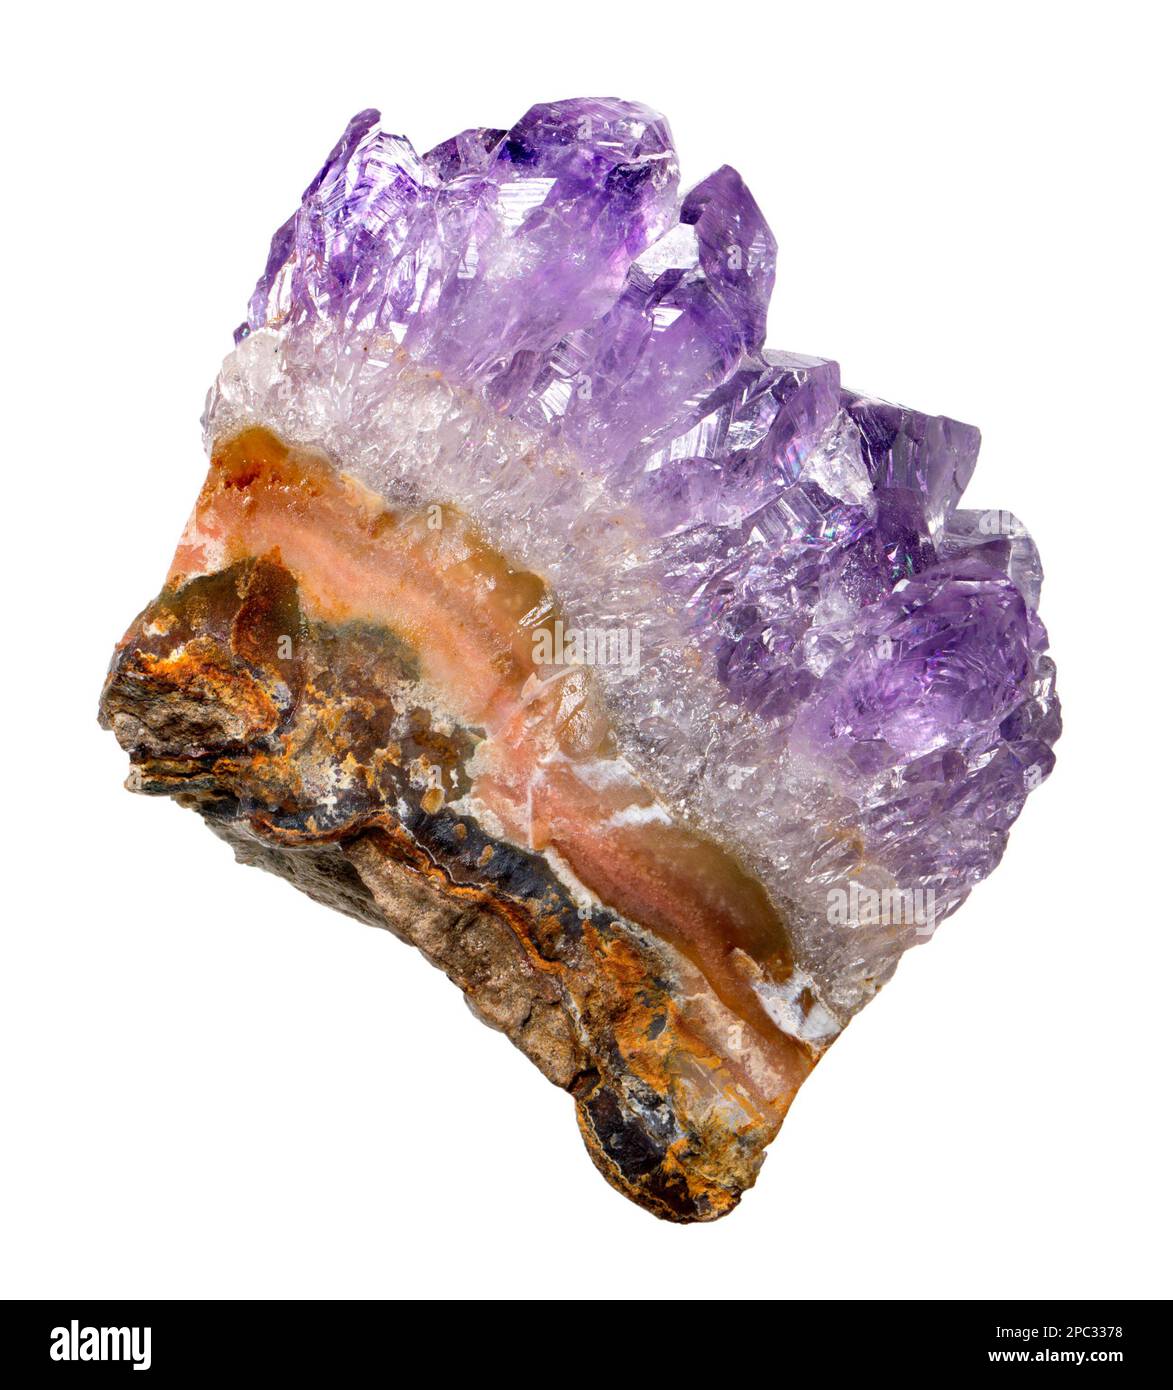 Amethyst crystals (purple quartz) on a matrix. c2cm across Stock Photo